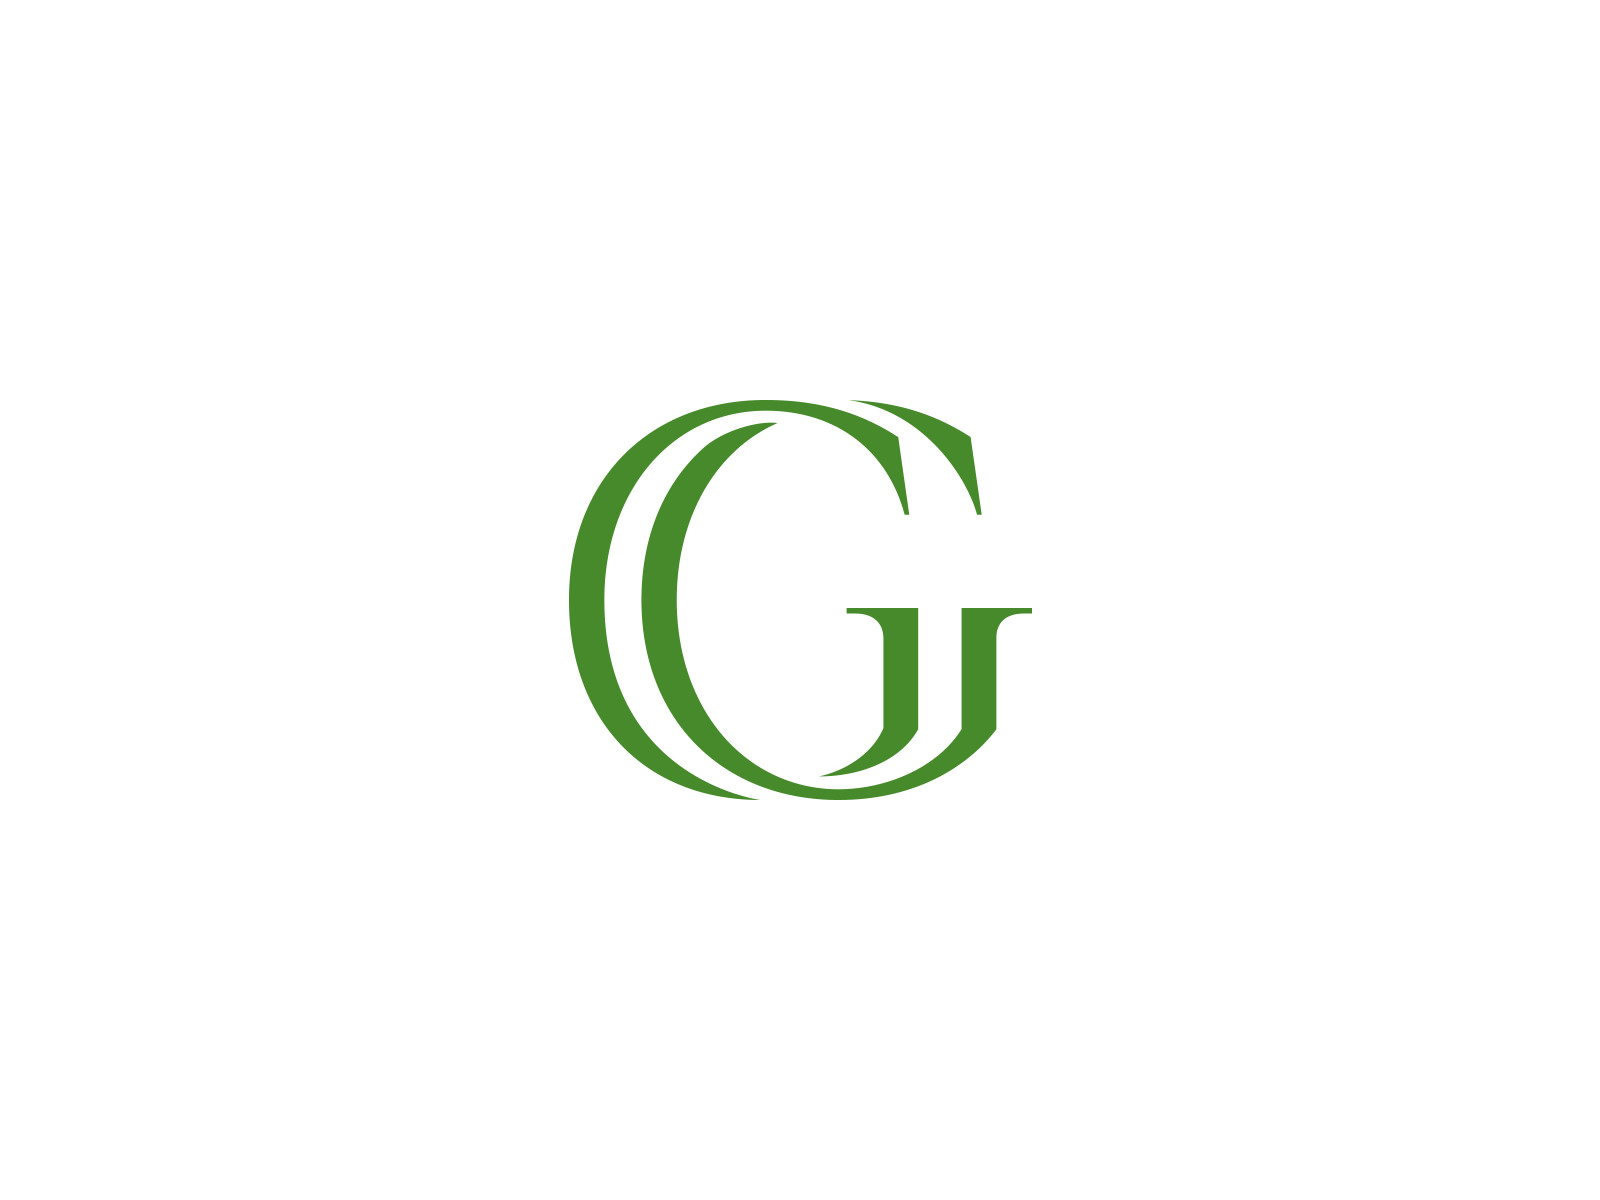 double g logo ideas 1